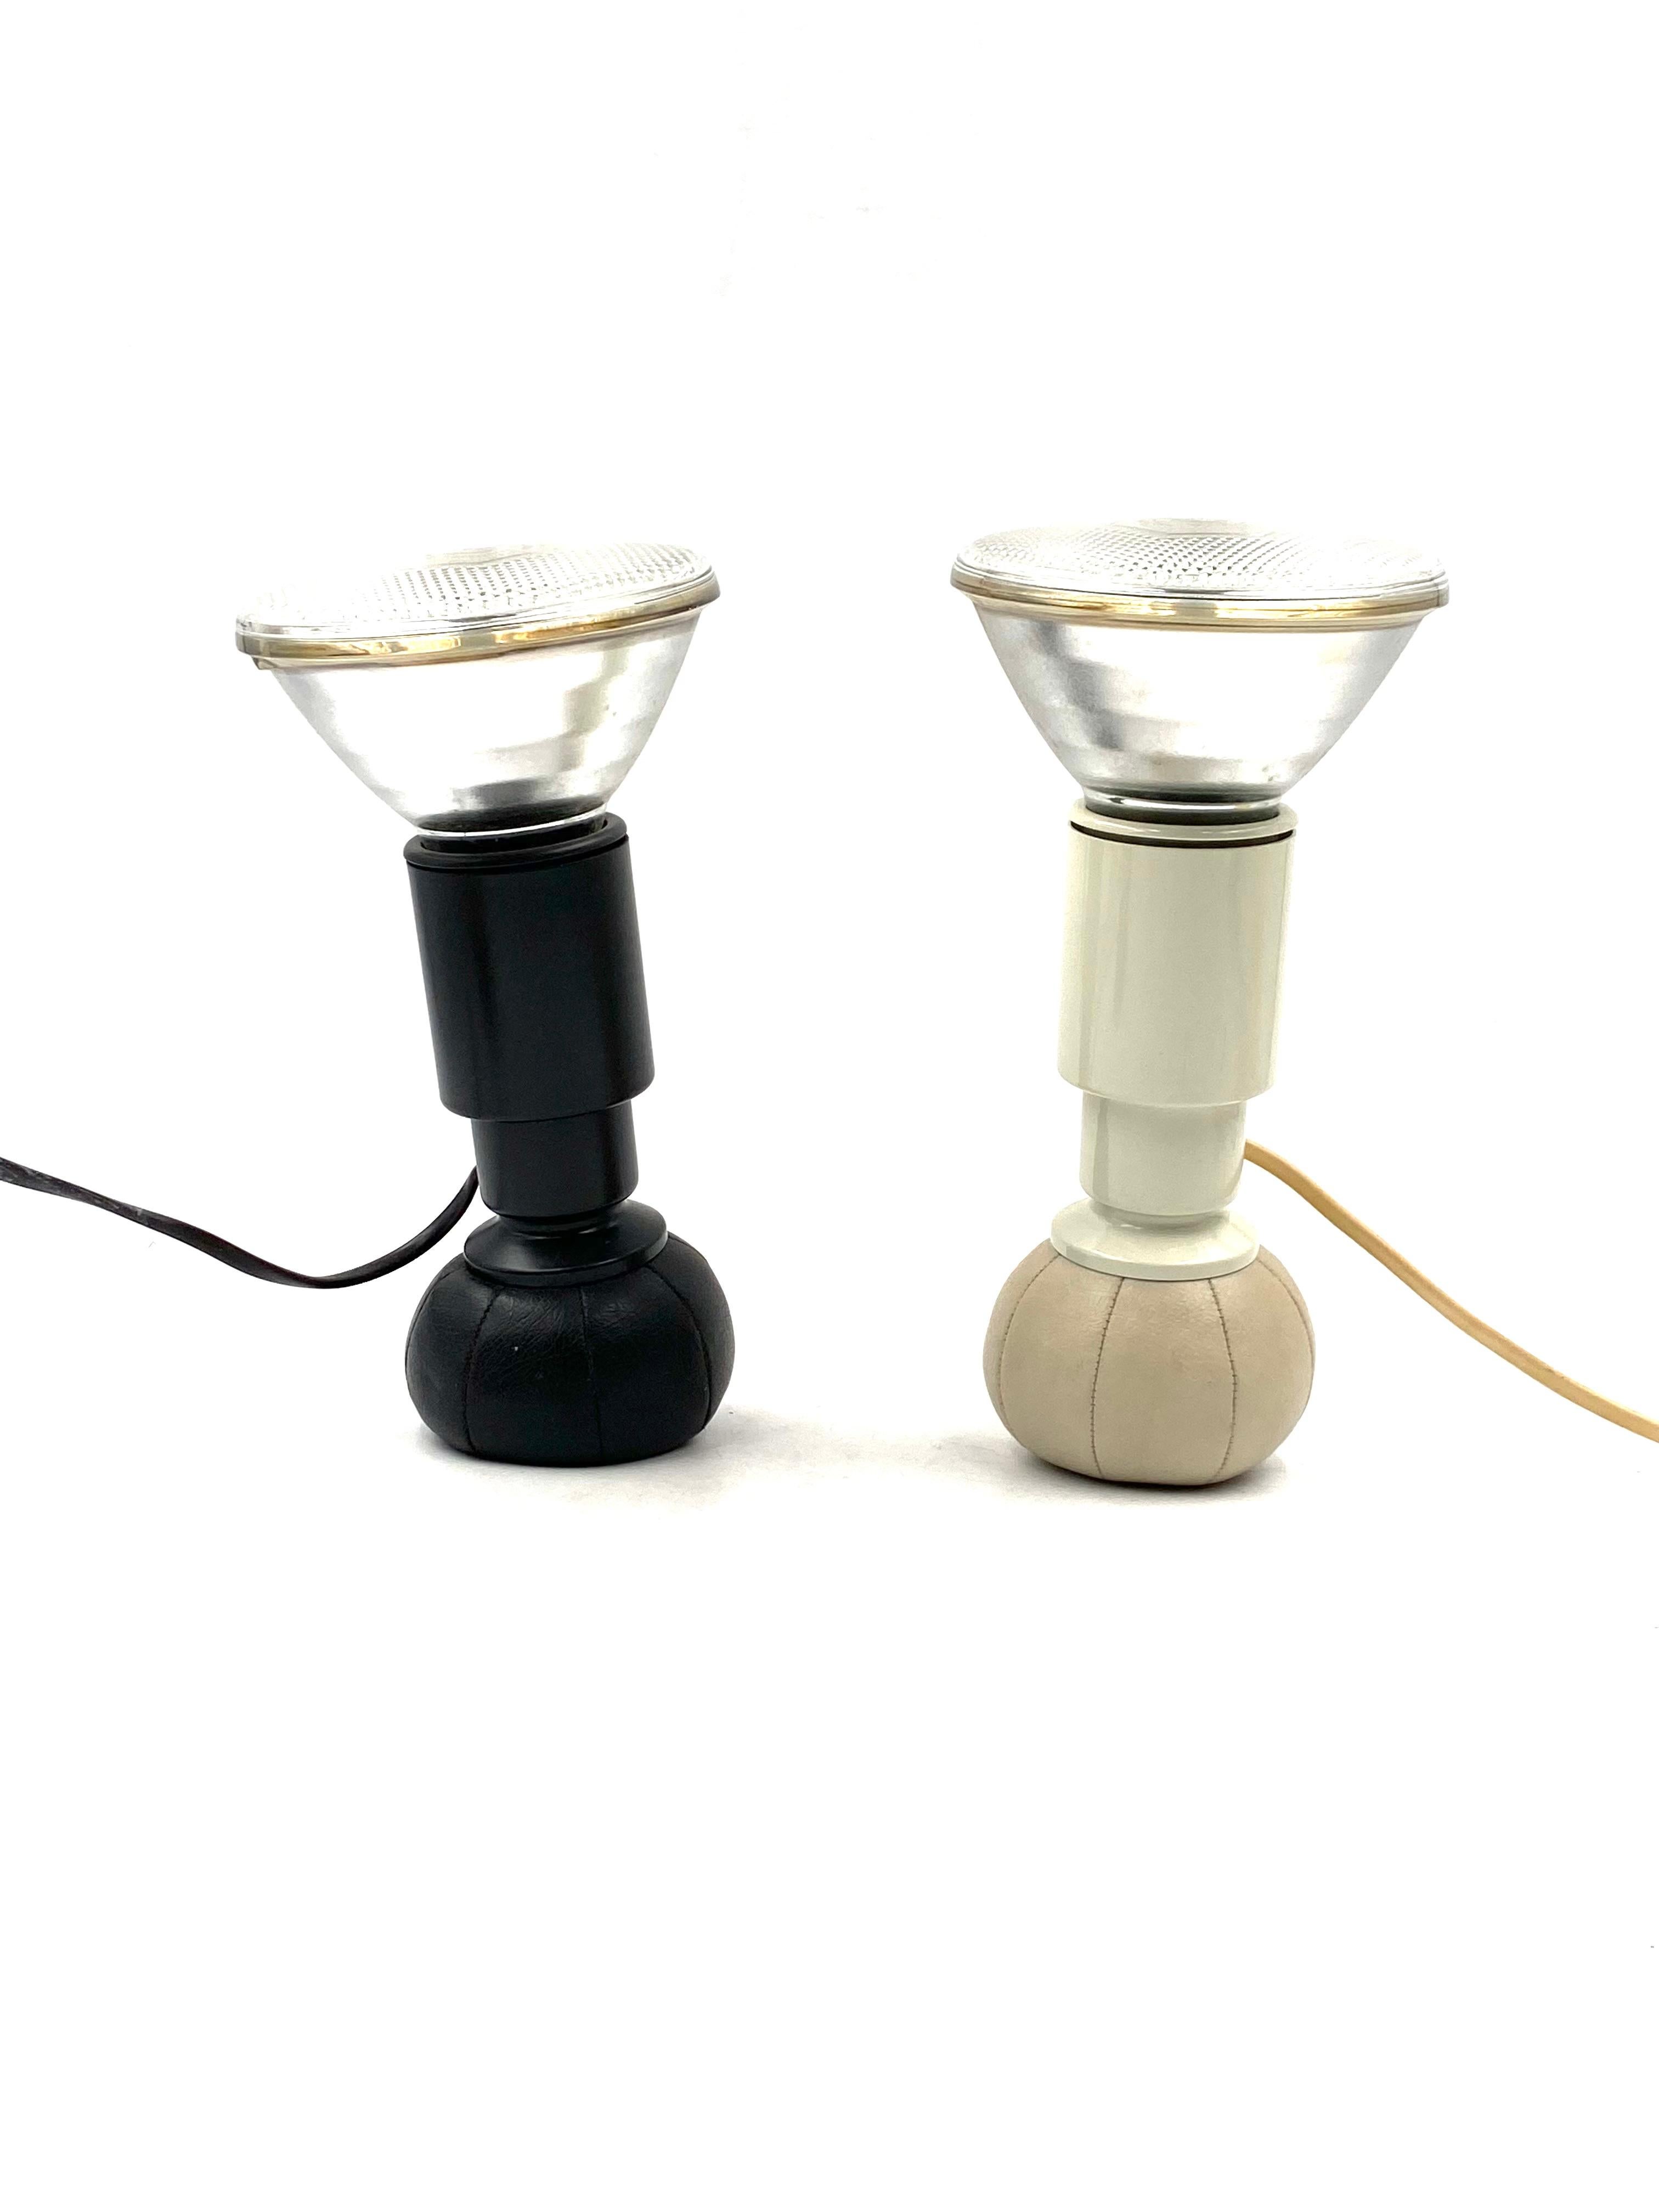 Gino Sarfatti, Set of 2 Table Lamps mod. 600/C, Arteluce Italy, 1966 For Sale 2